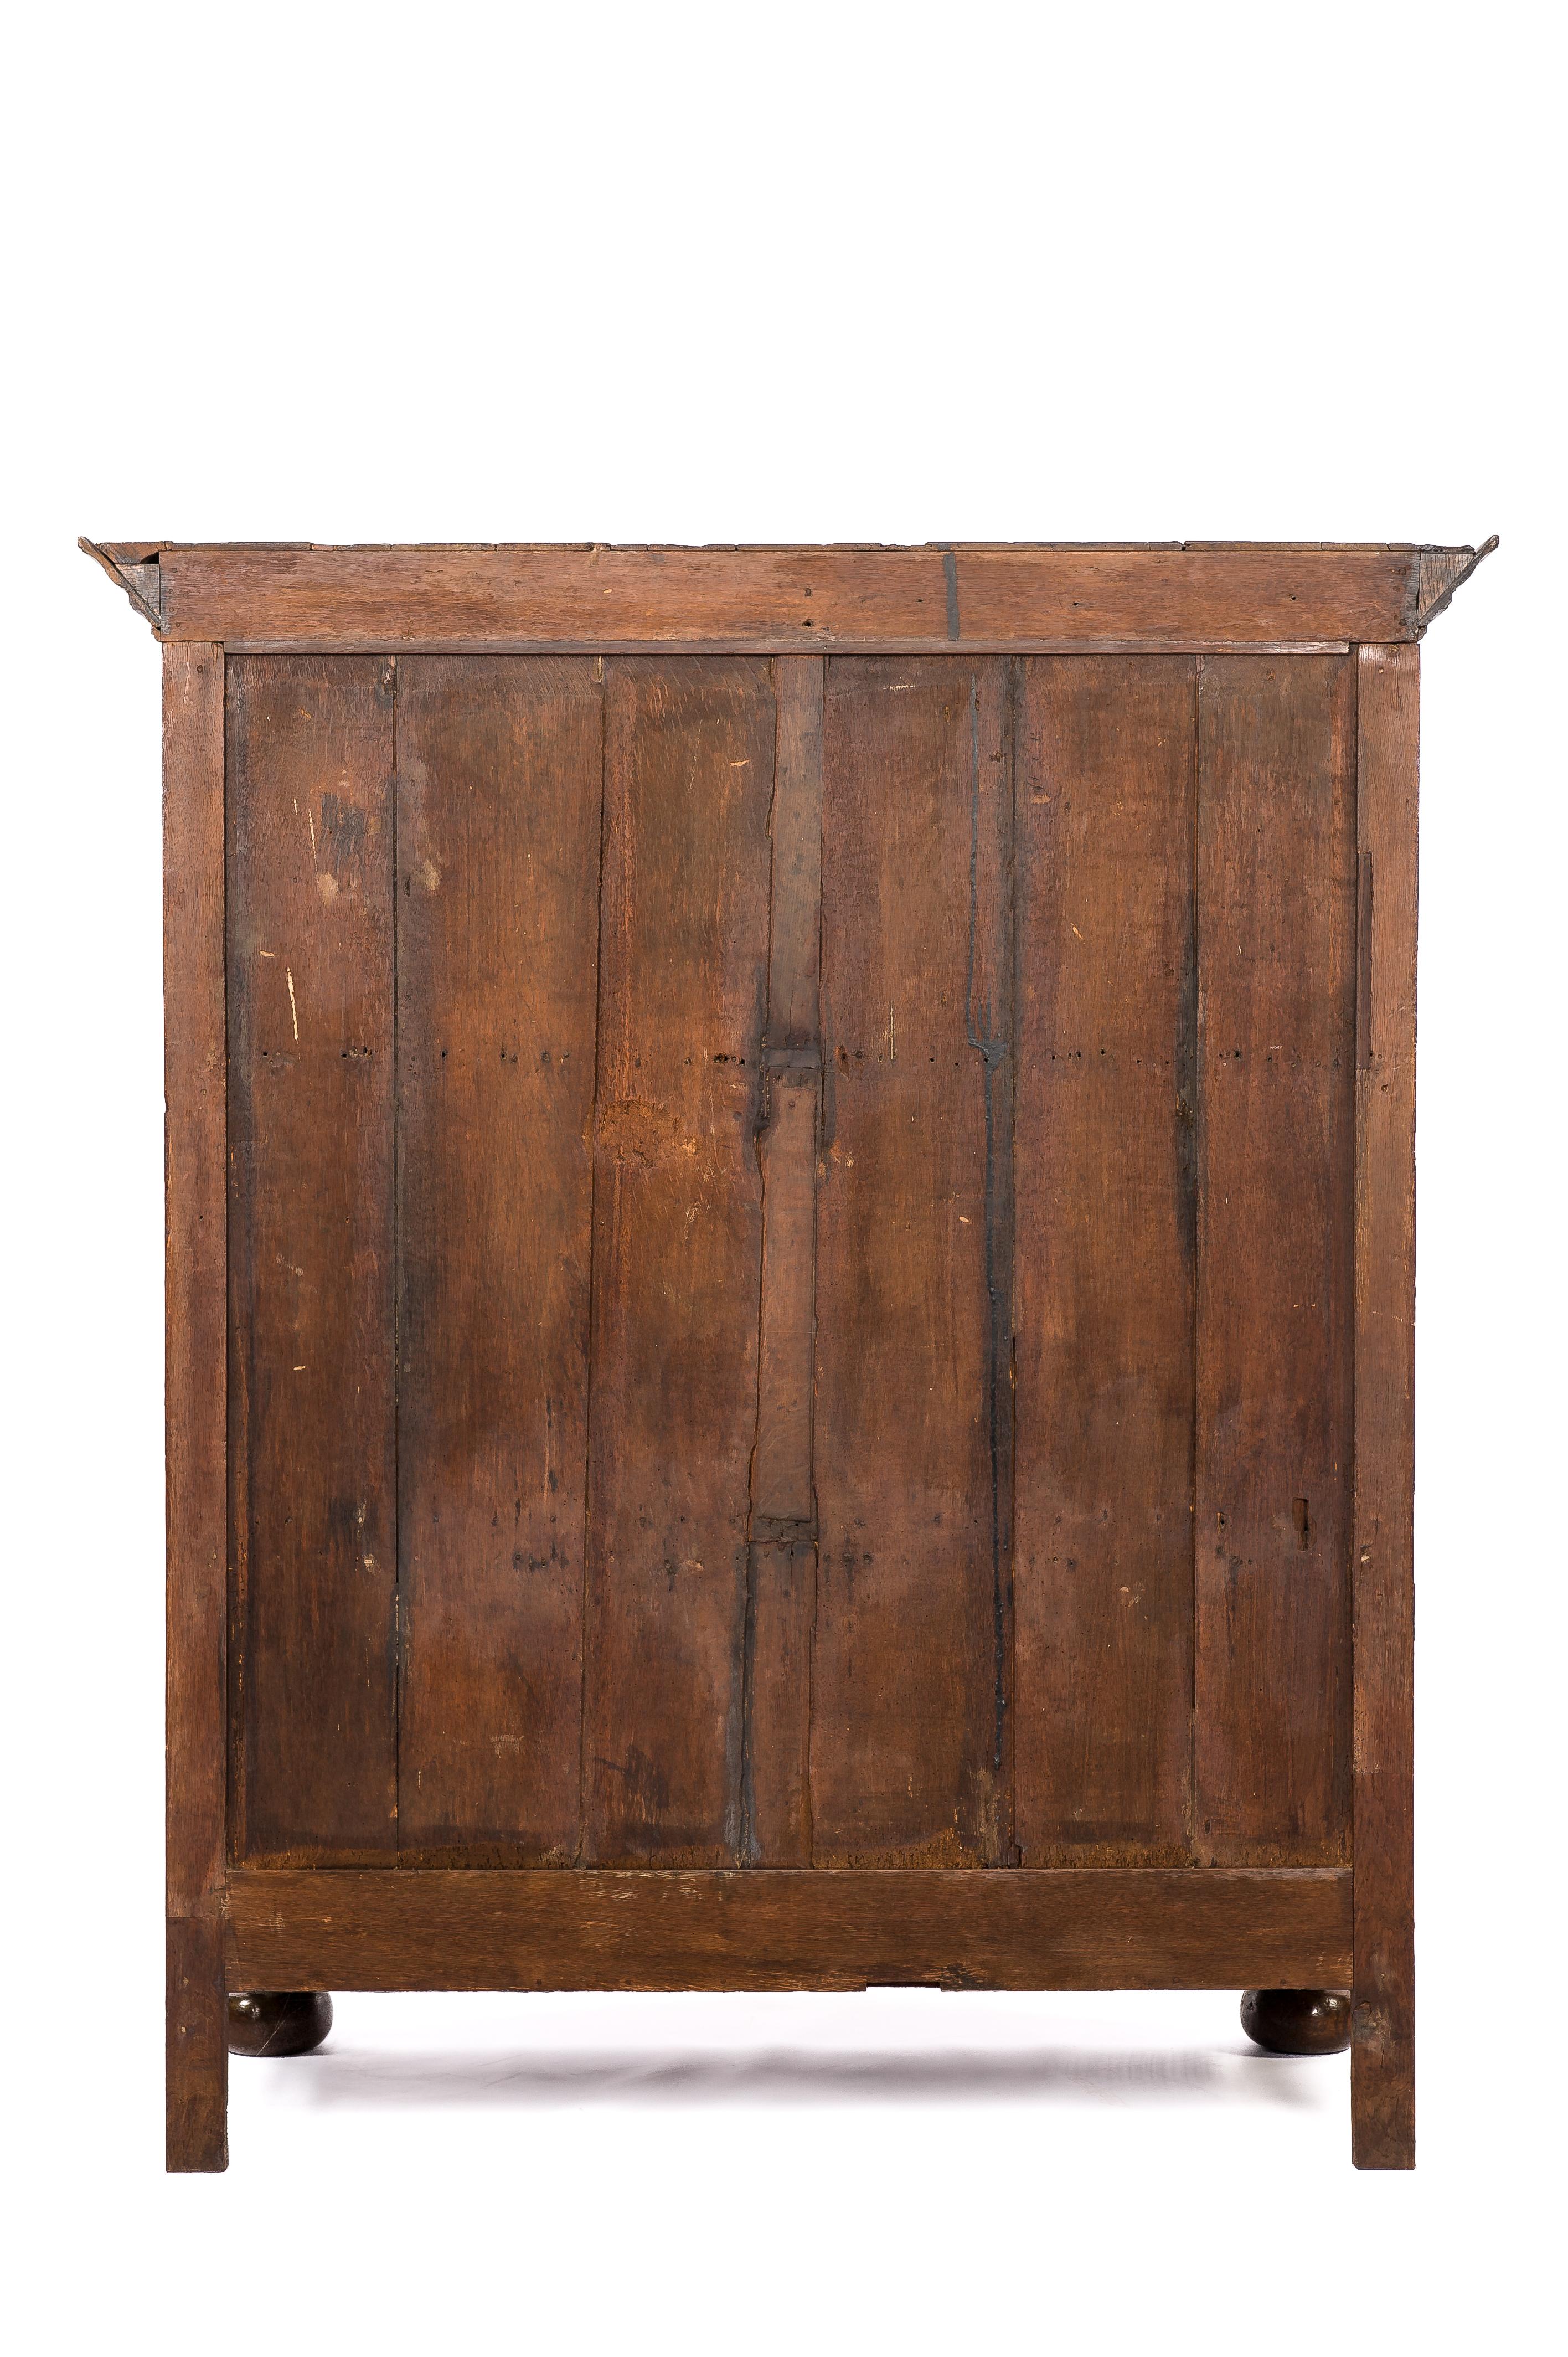 Carved Antique 17th-century Dutch Renaissance Portal Cupboard in Solid Oak For Sale